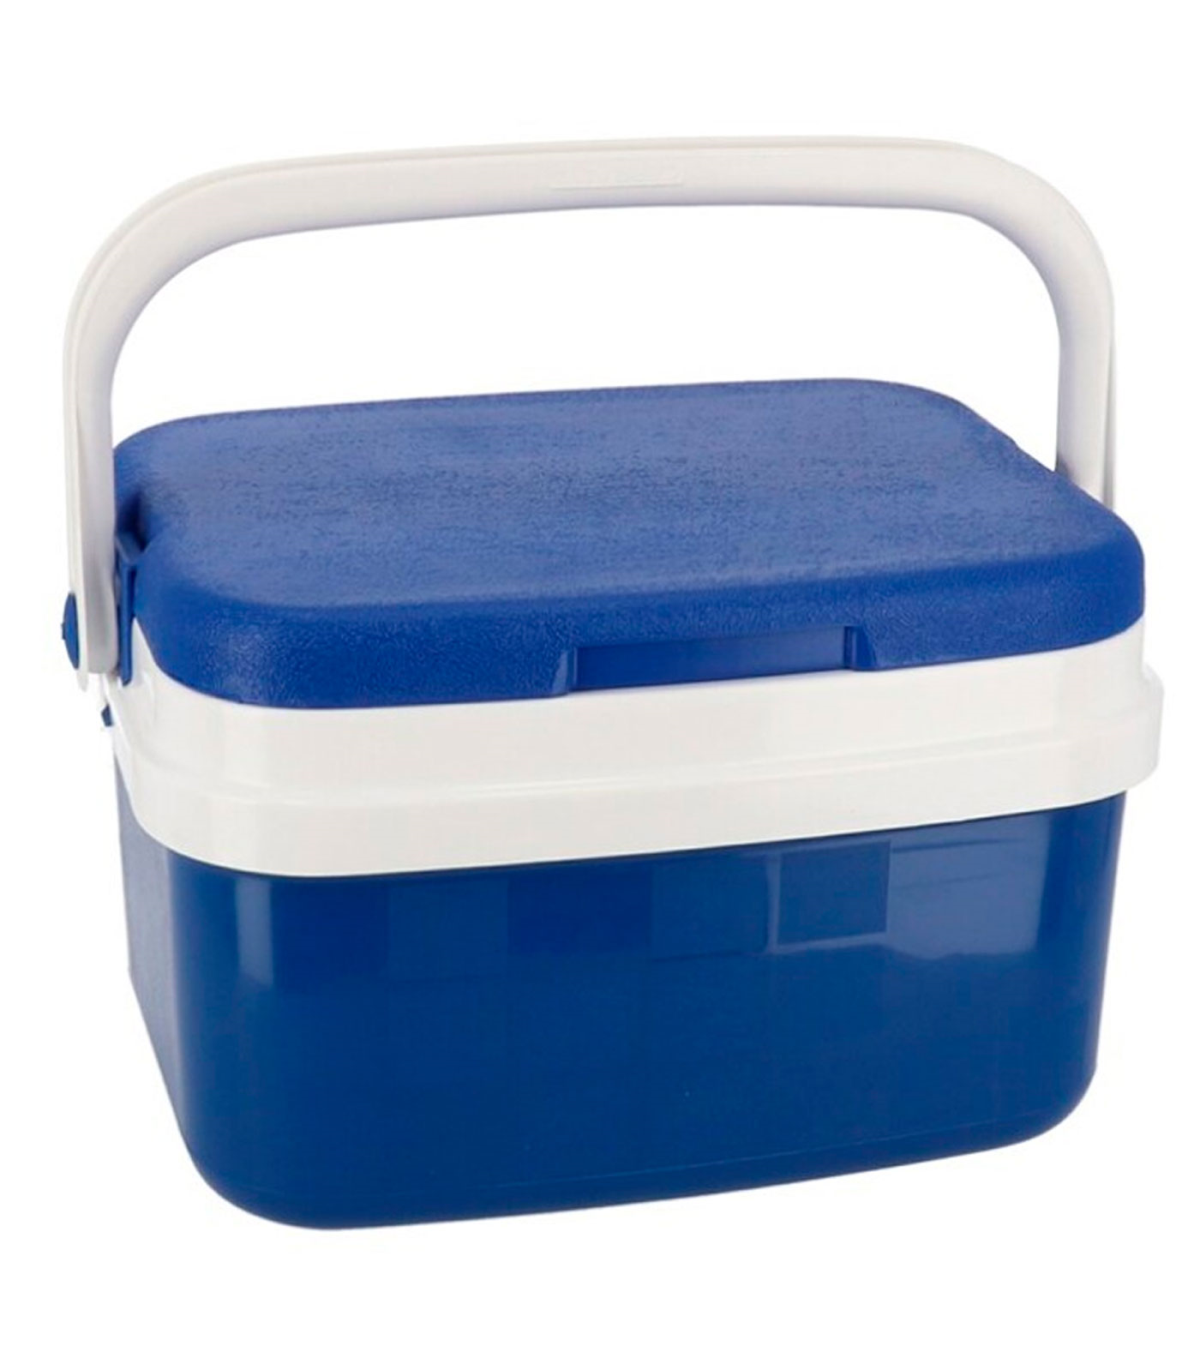 Nevera portátil con asa, 5 litros, polipropileno,porta alimentos playa, acampada, camping, 19 x 26 x 20 cm, color azul y bl